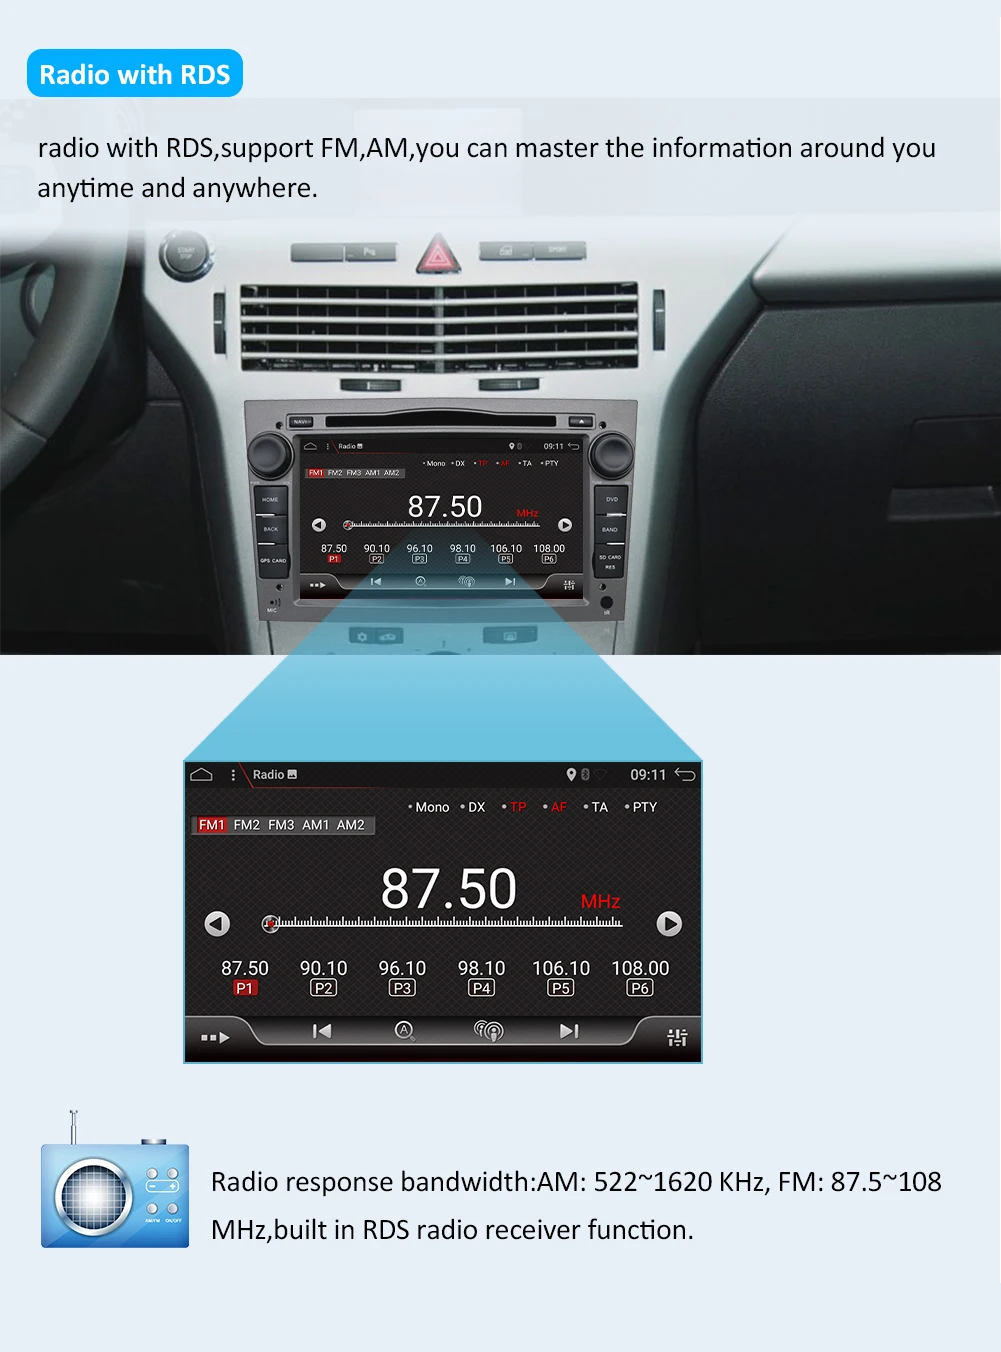 Cheap 32G ROM Android 9.0 2din CAR DVD GPS For Vauxhall Opel Astra H G Vectra Antara Zafira Corsa multimedia player stereo radio 11